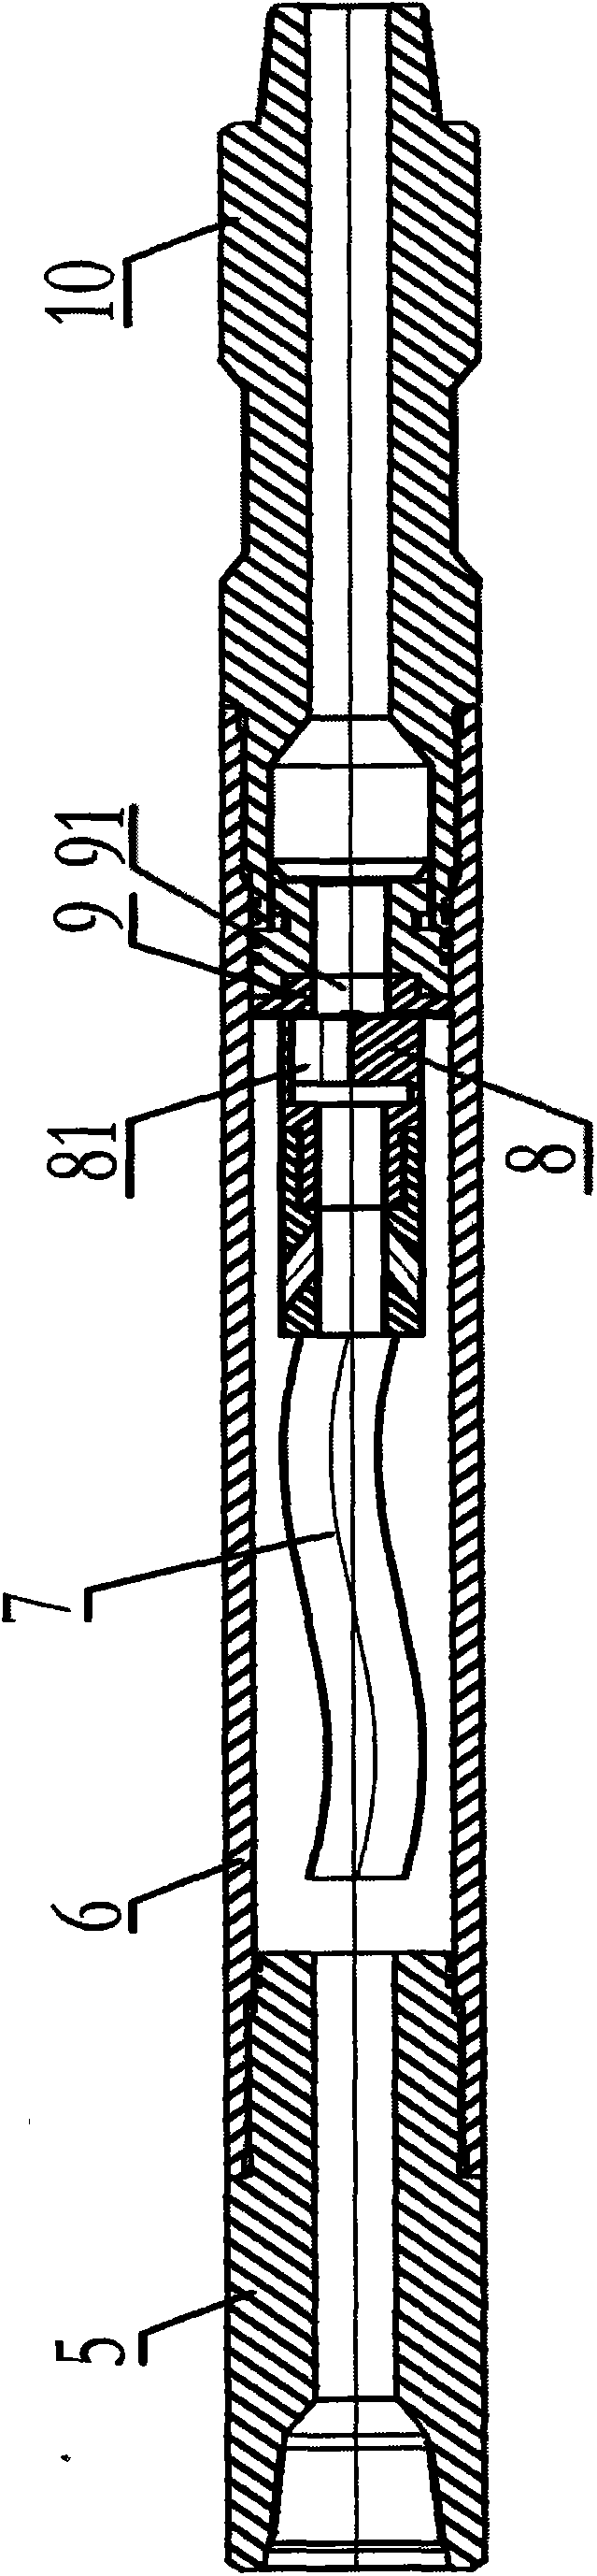 Hydraulic oscillator for well drilling